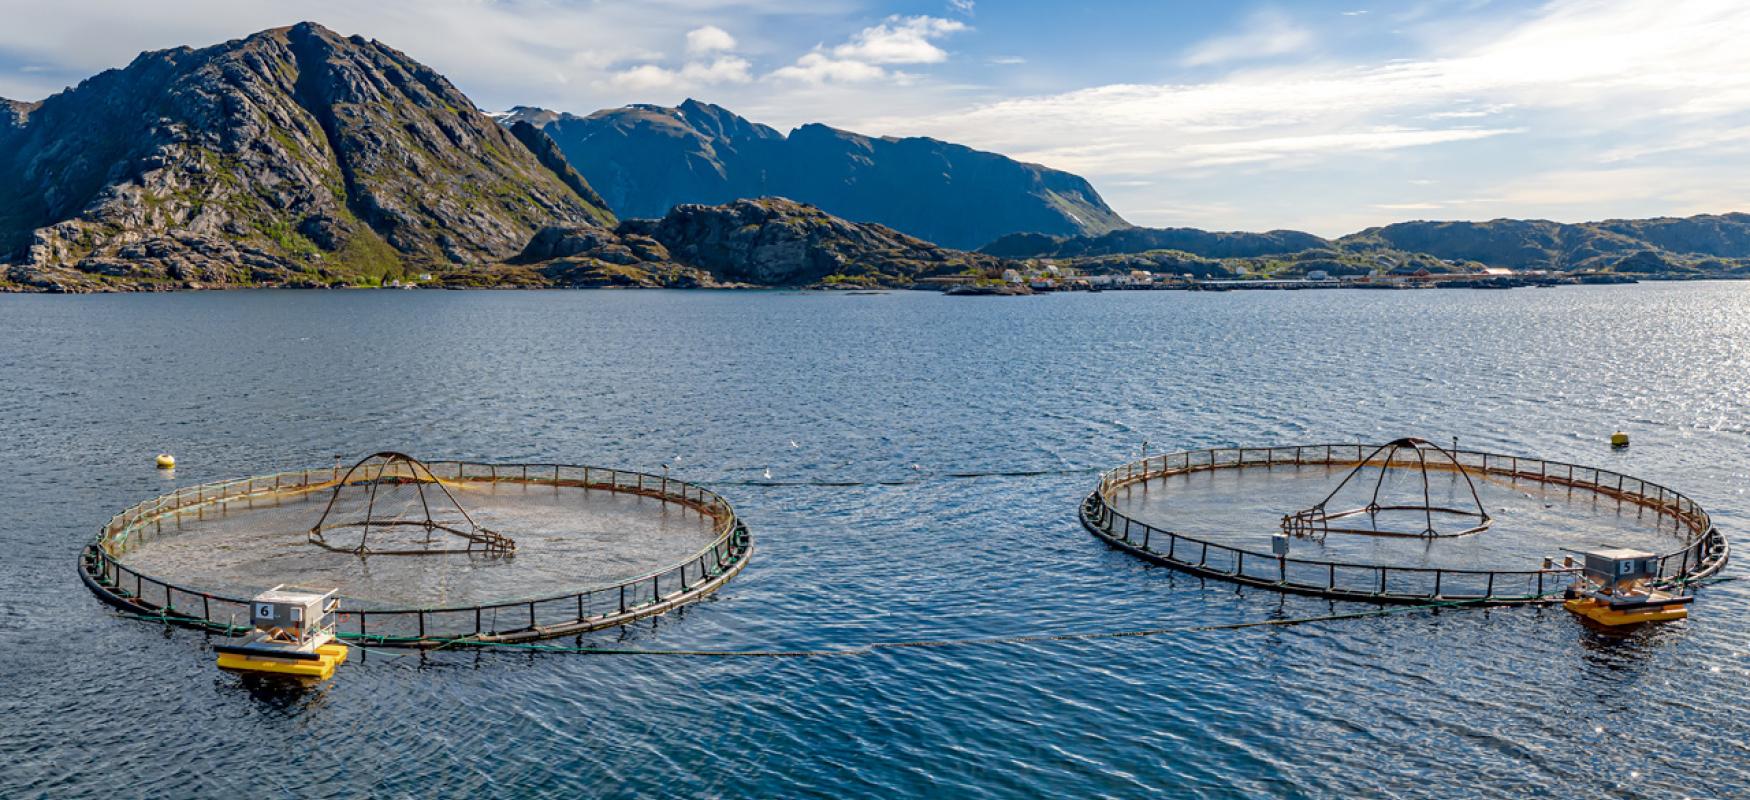 Salmon farms in Norway